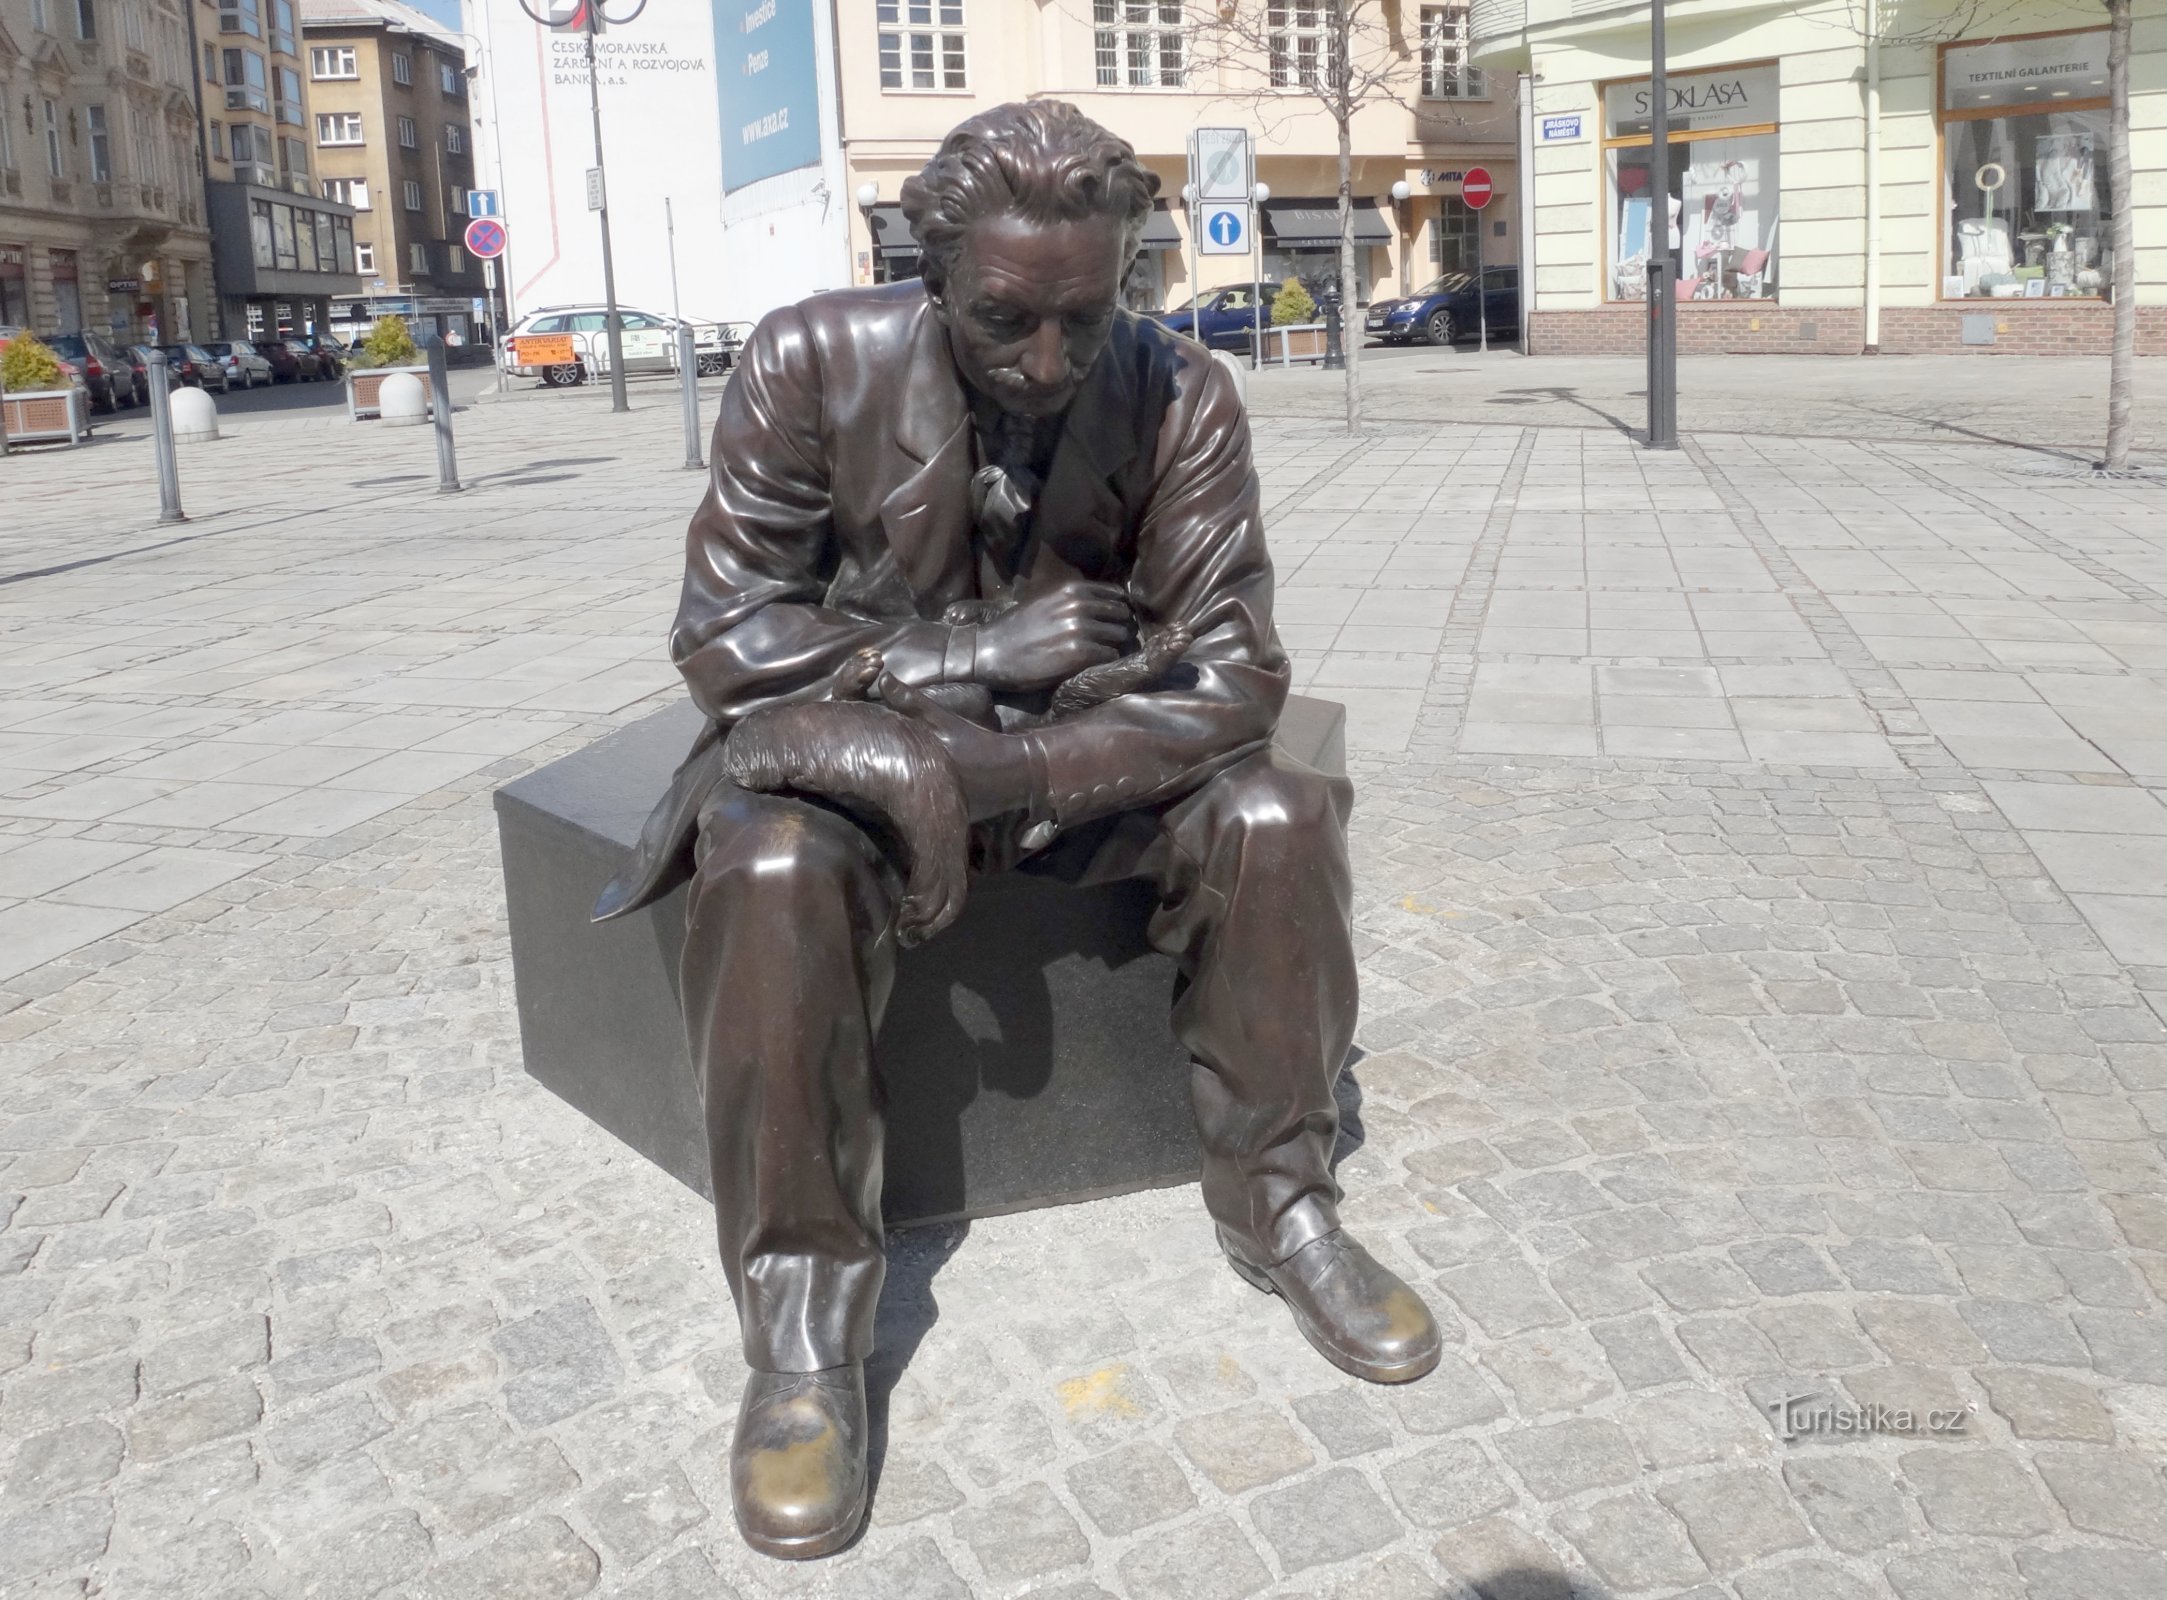 Ostrava - staty av Leoš Janáček